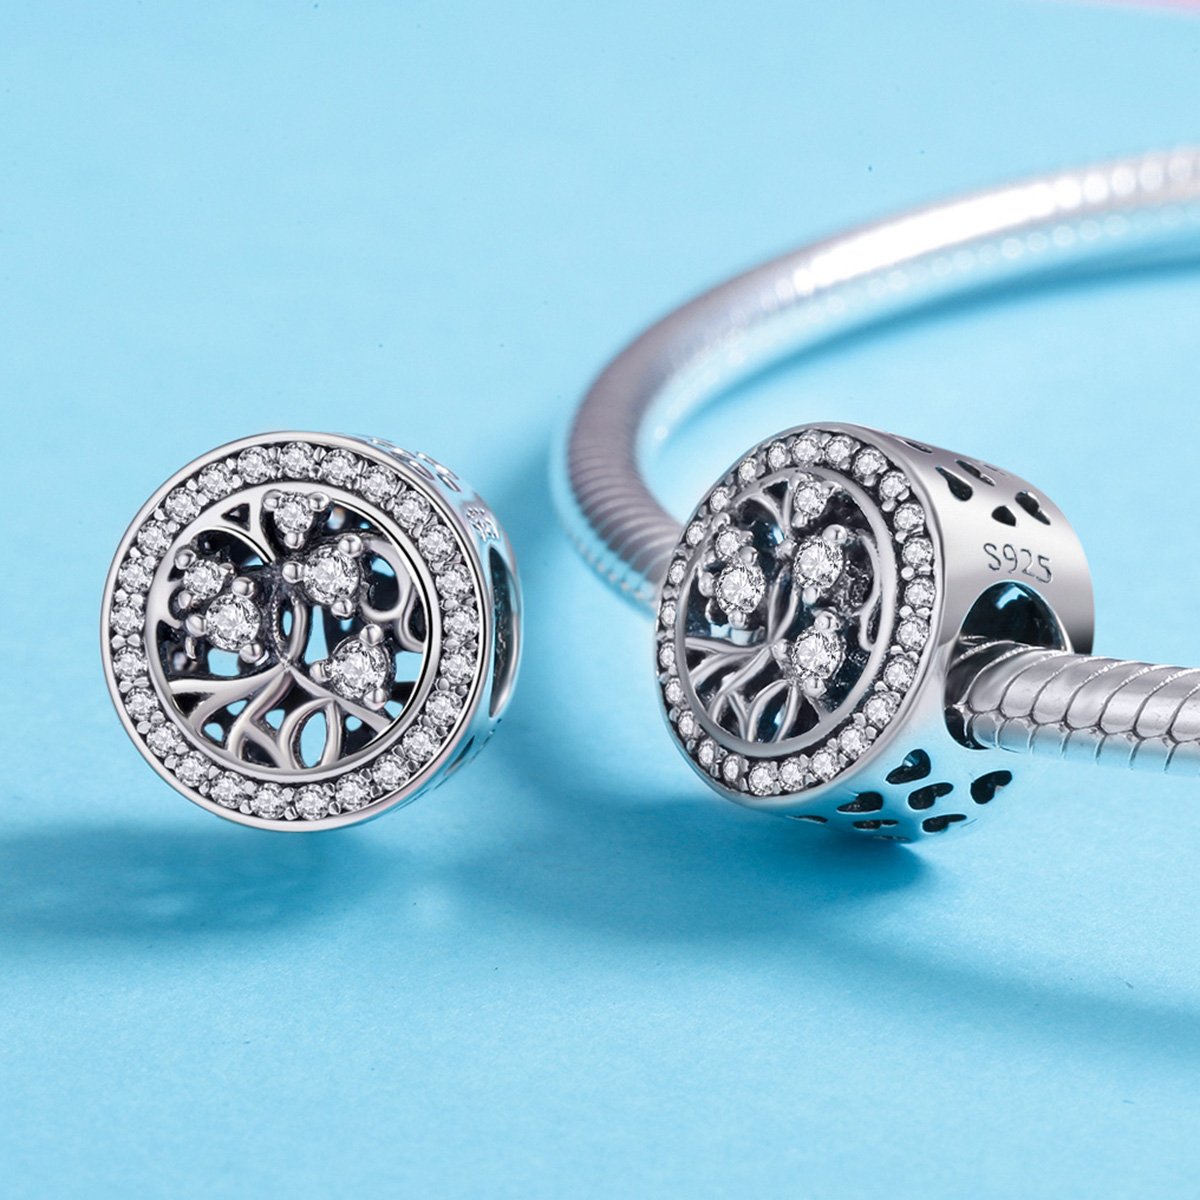 Sterling 925 silver charm the Tree bead pendant fits Pandora charm and European charm bracelet Xaxe.com